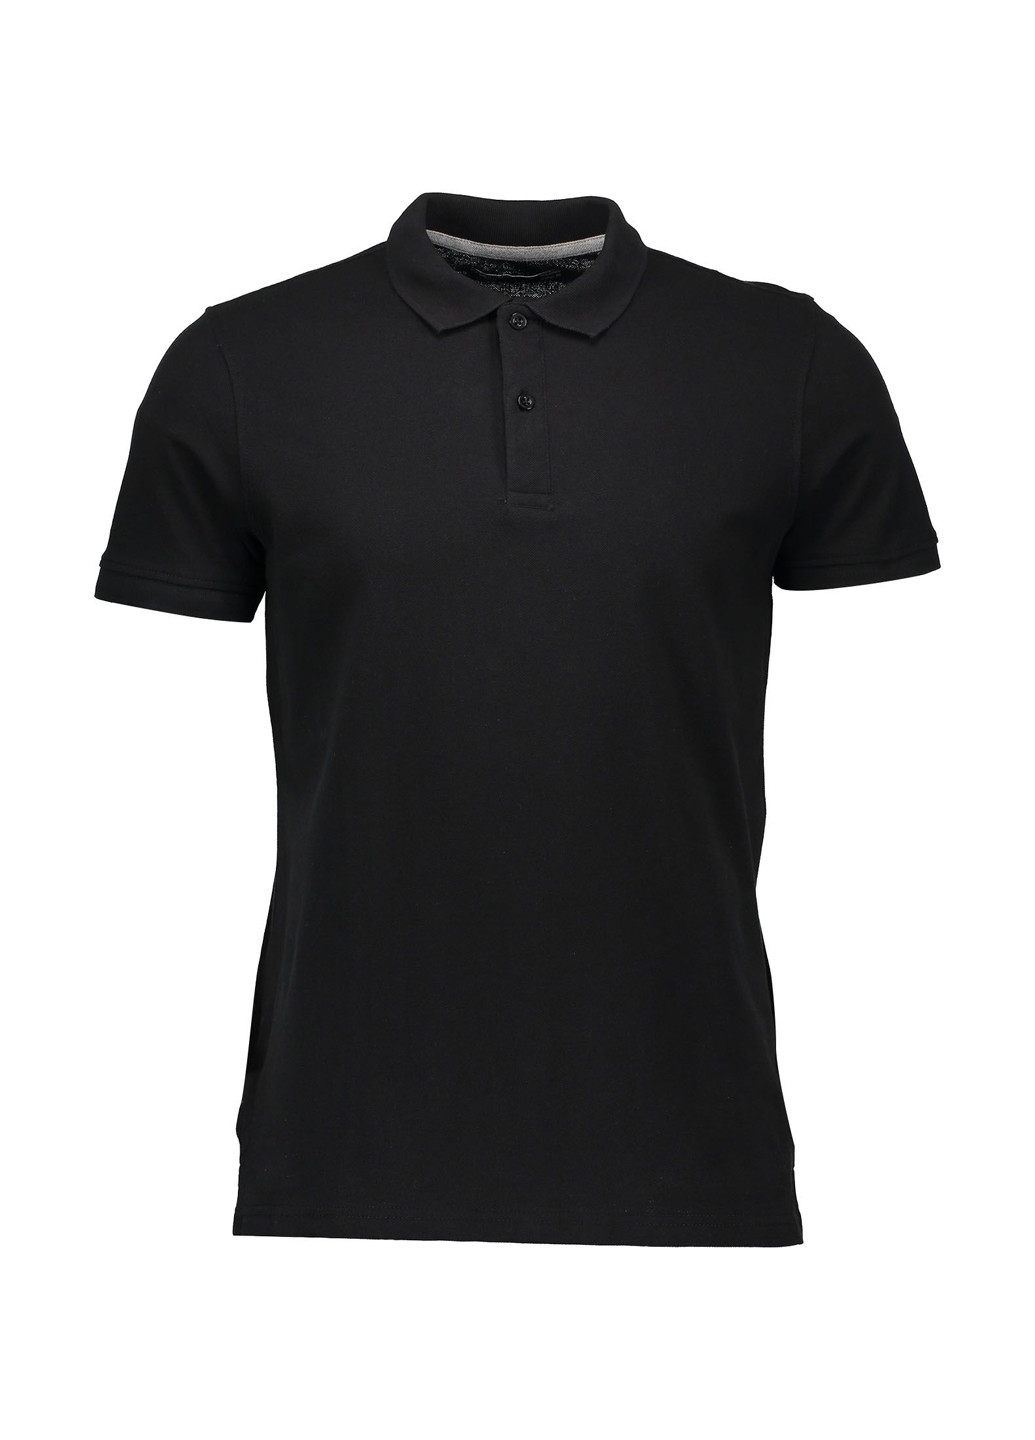 Черная футболка-поло для мужчин Piazza Italia однотонная